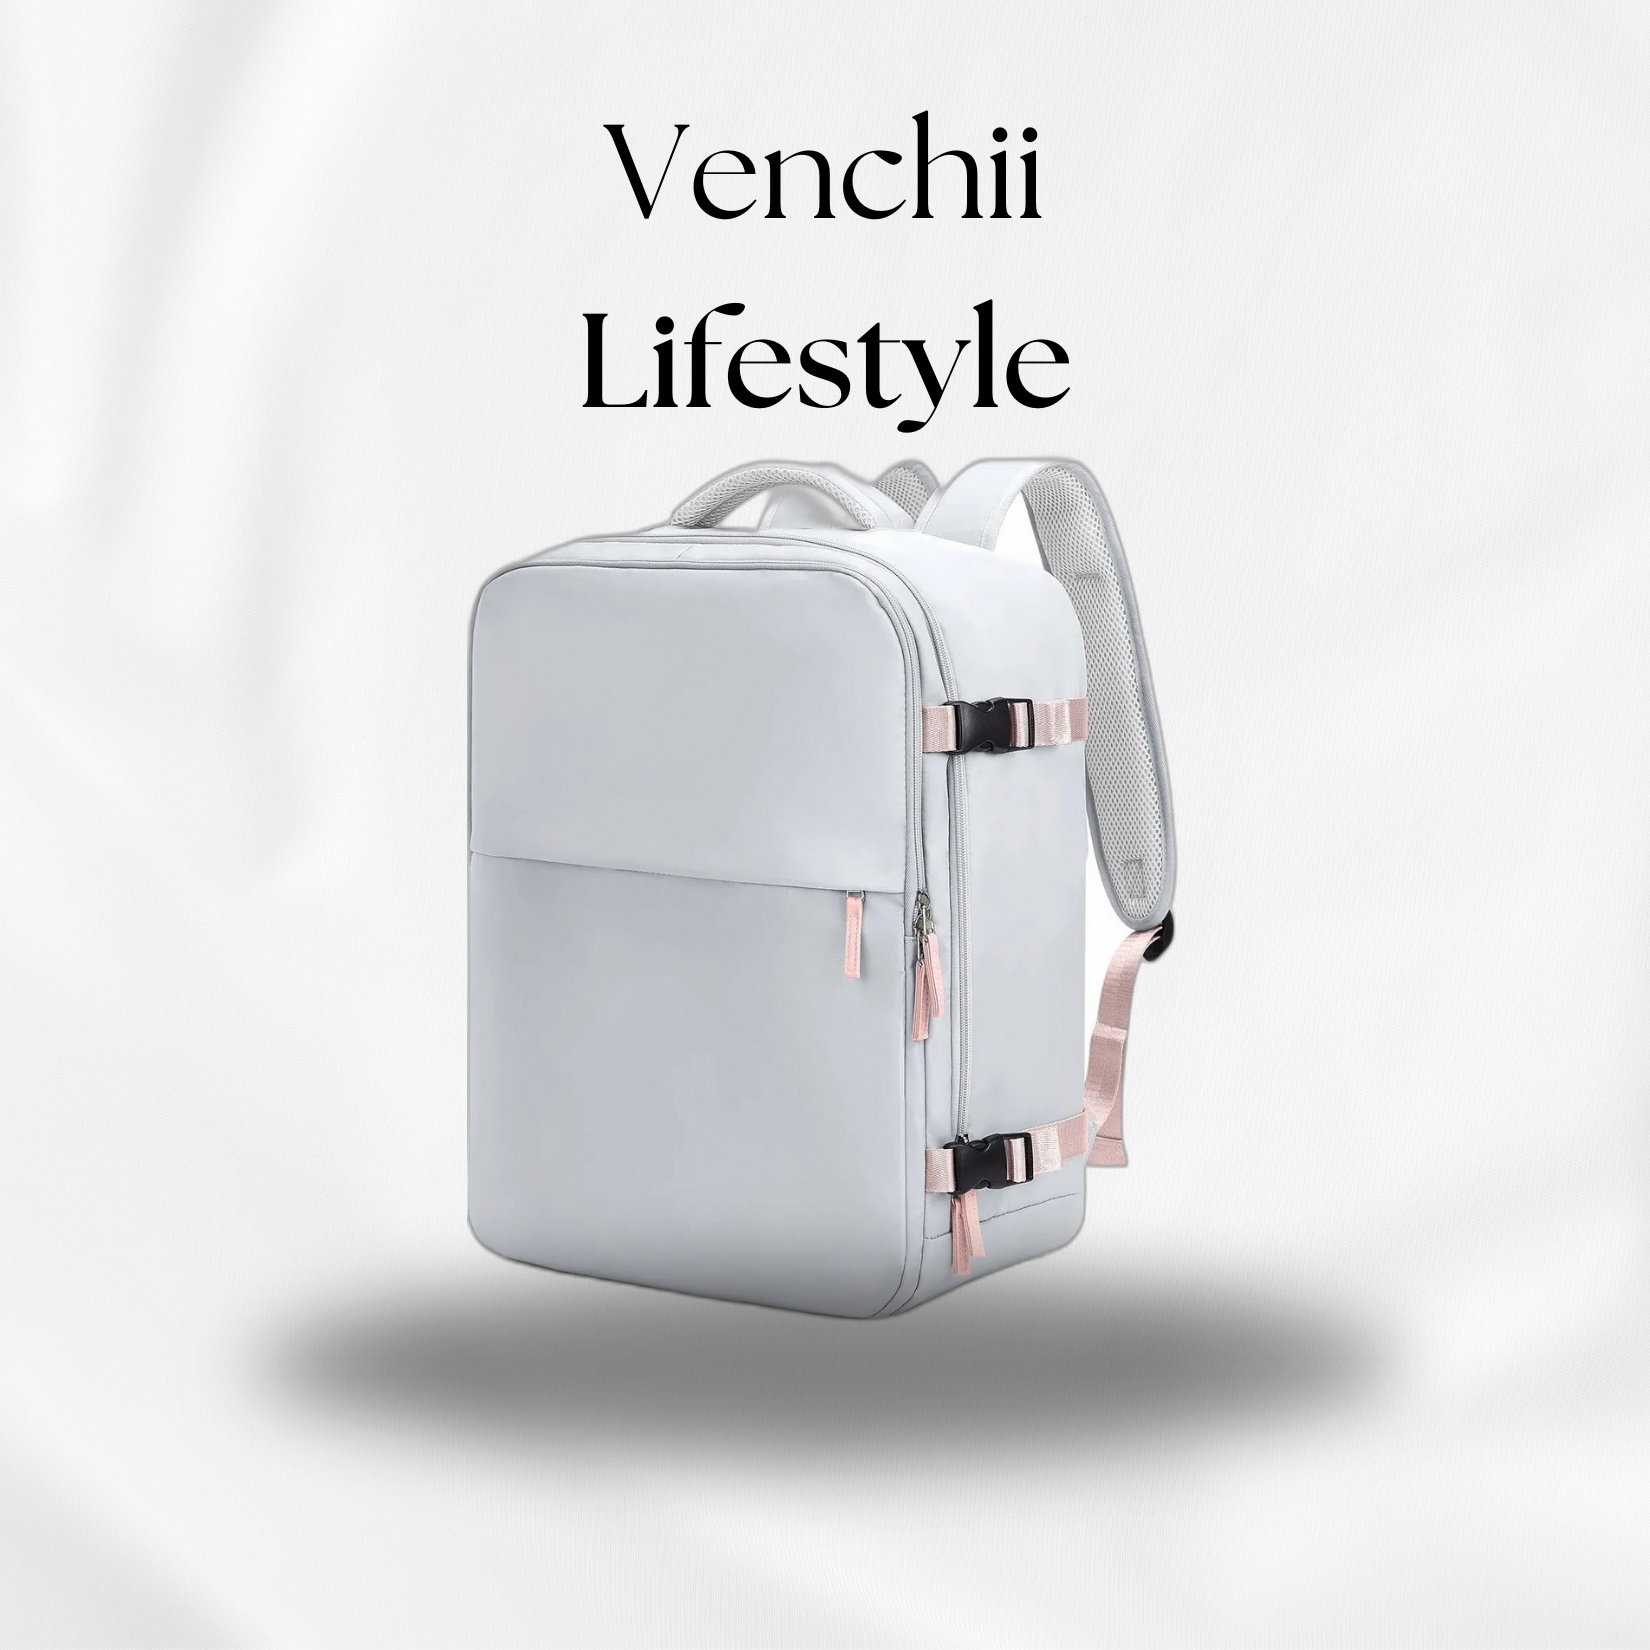 Venchii Airlinebag - Lifestyle